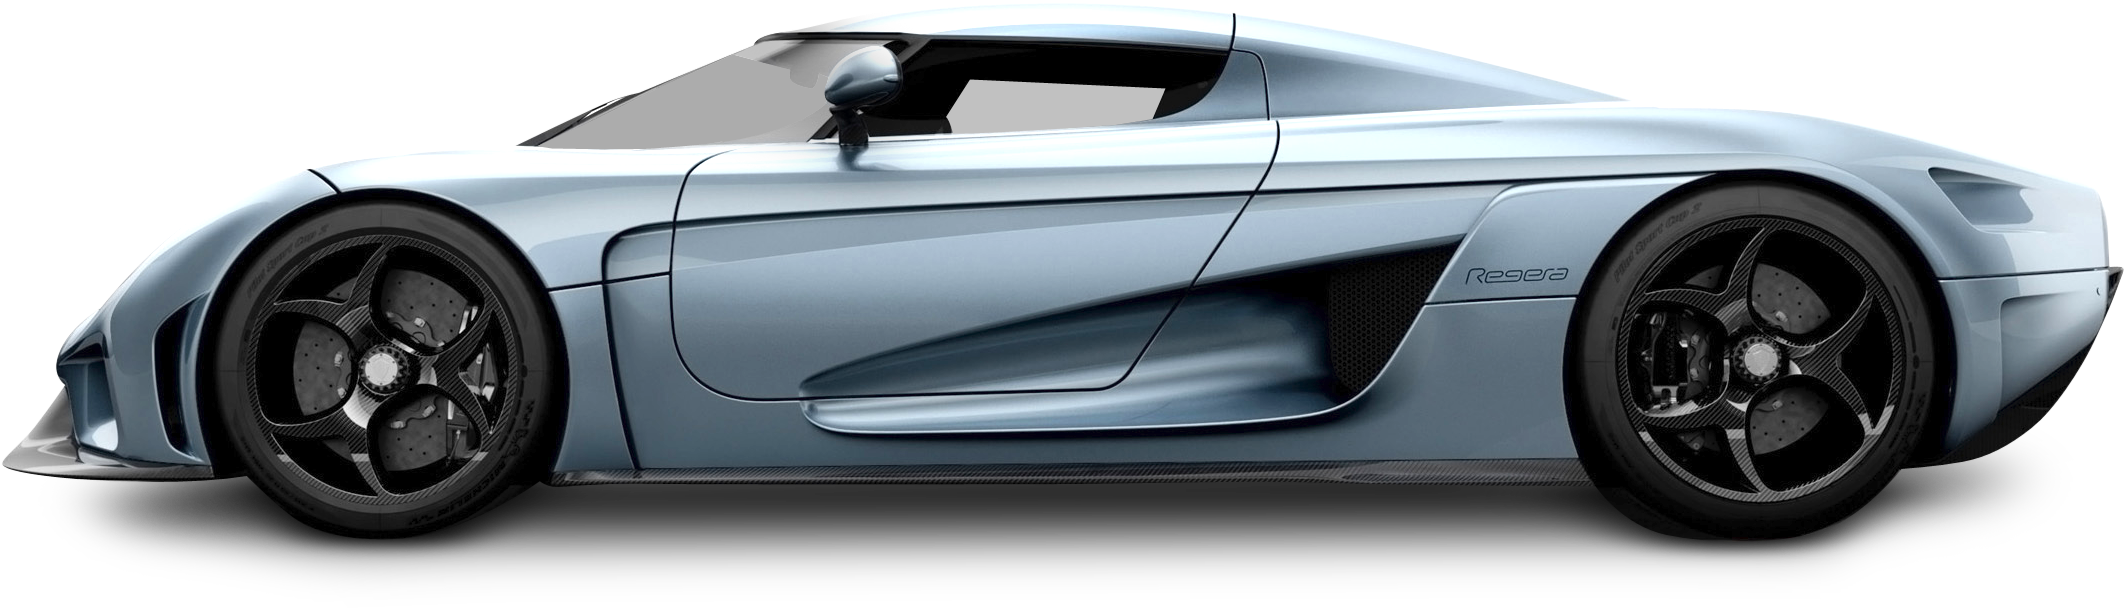 Koenigsegg ภาพ PNG รถยนต์